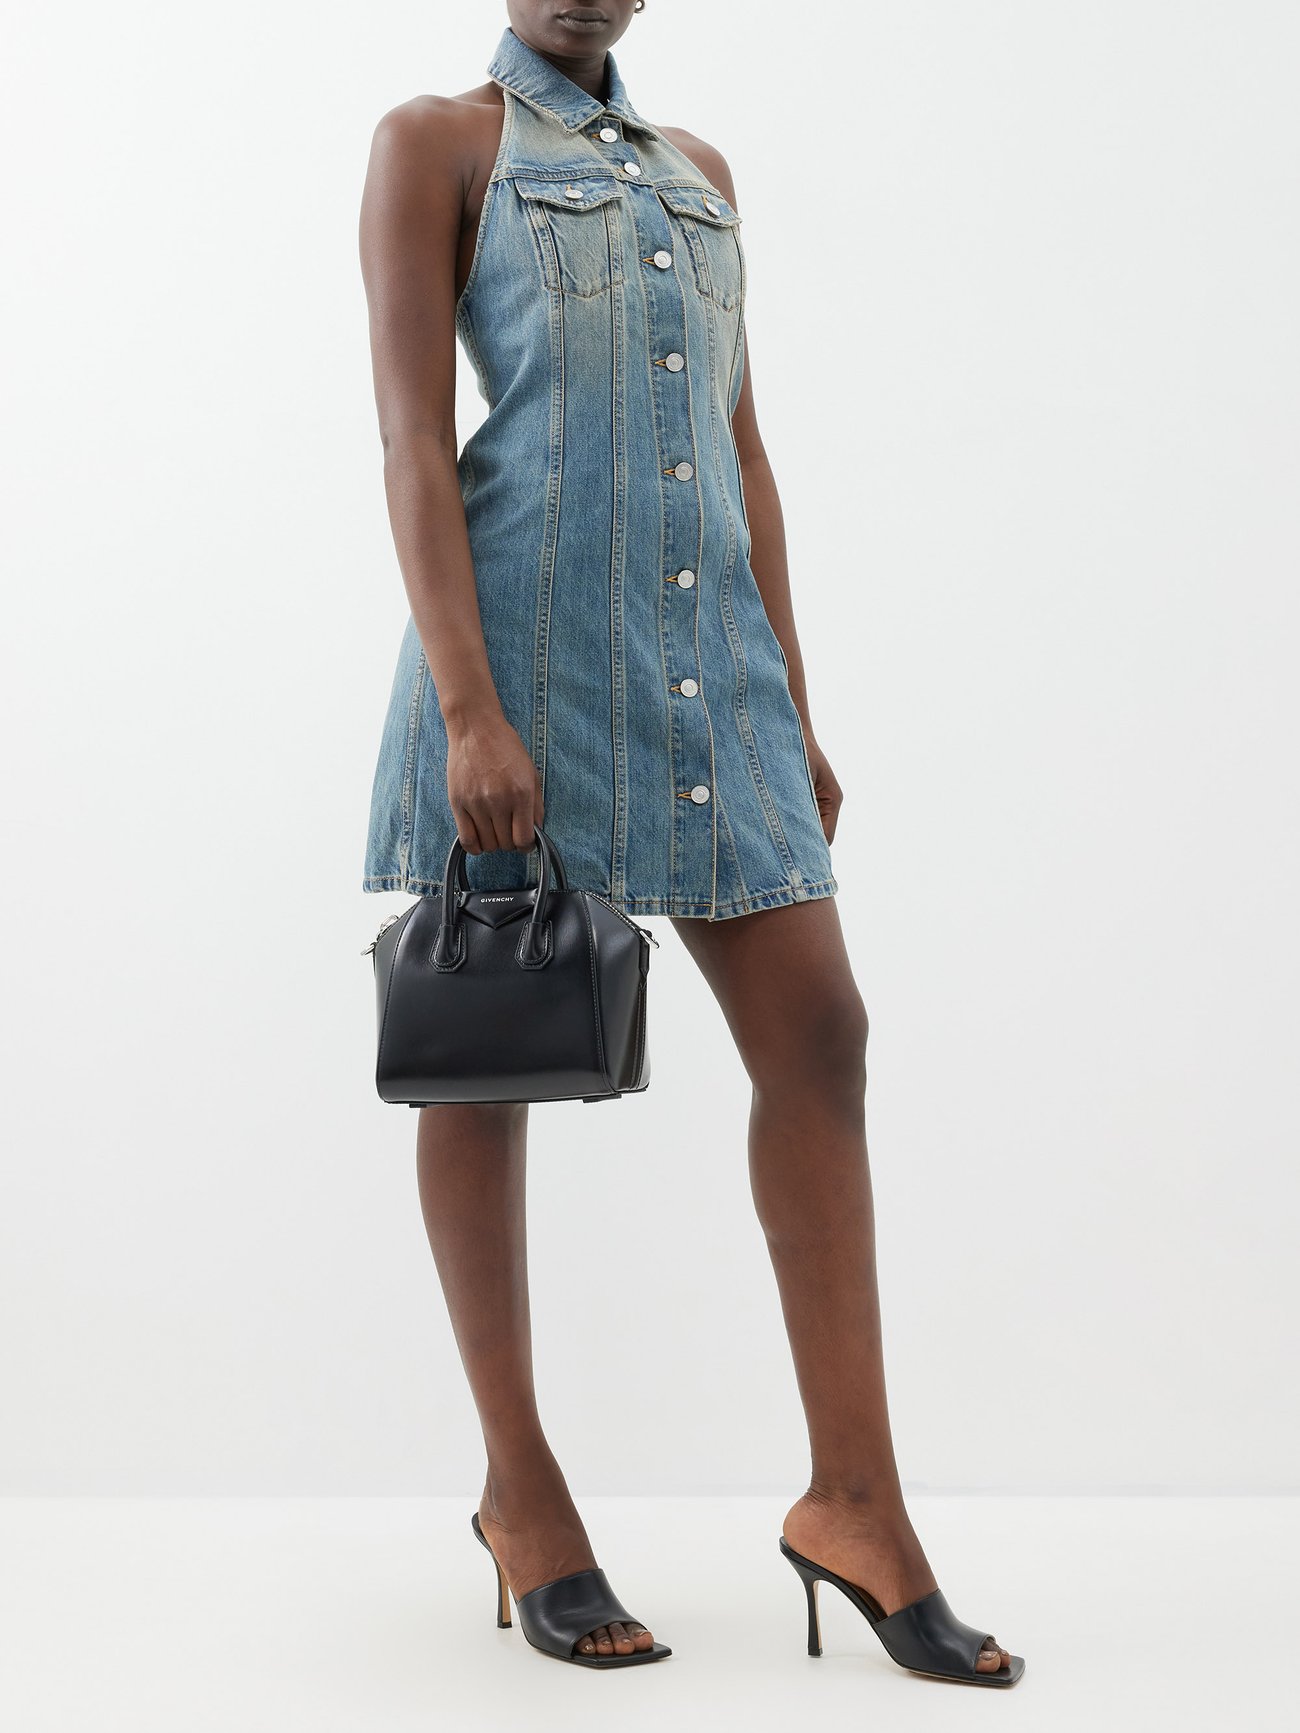 Givenchy Antigona mini bag  Cold outfits, Antigona mini outfit, Givenchy  antigona mini outfit